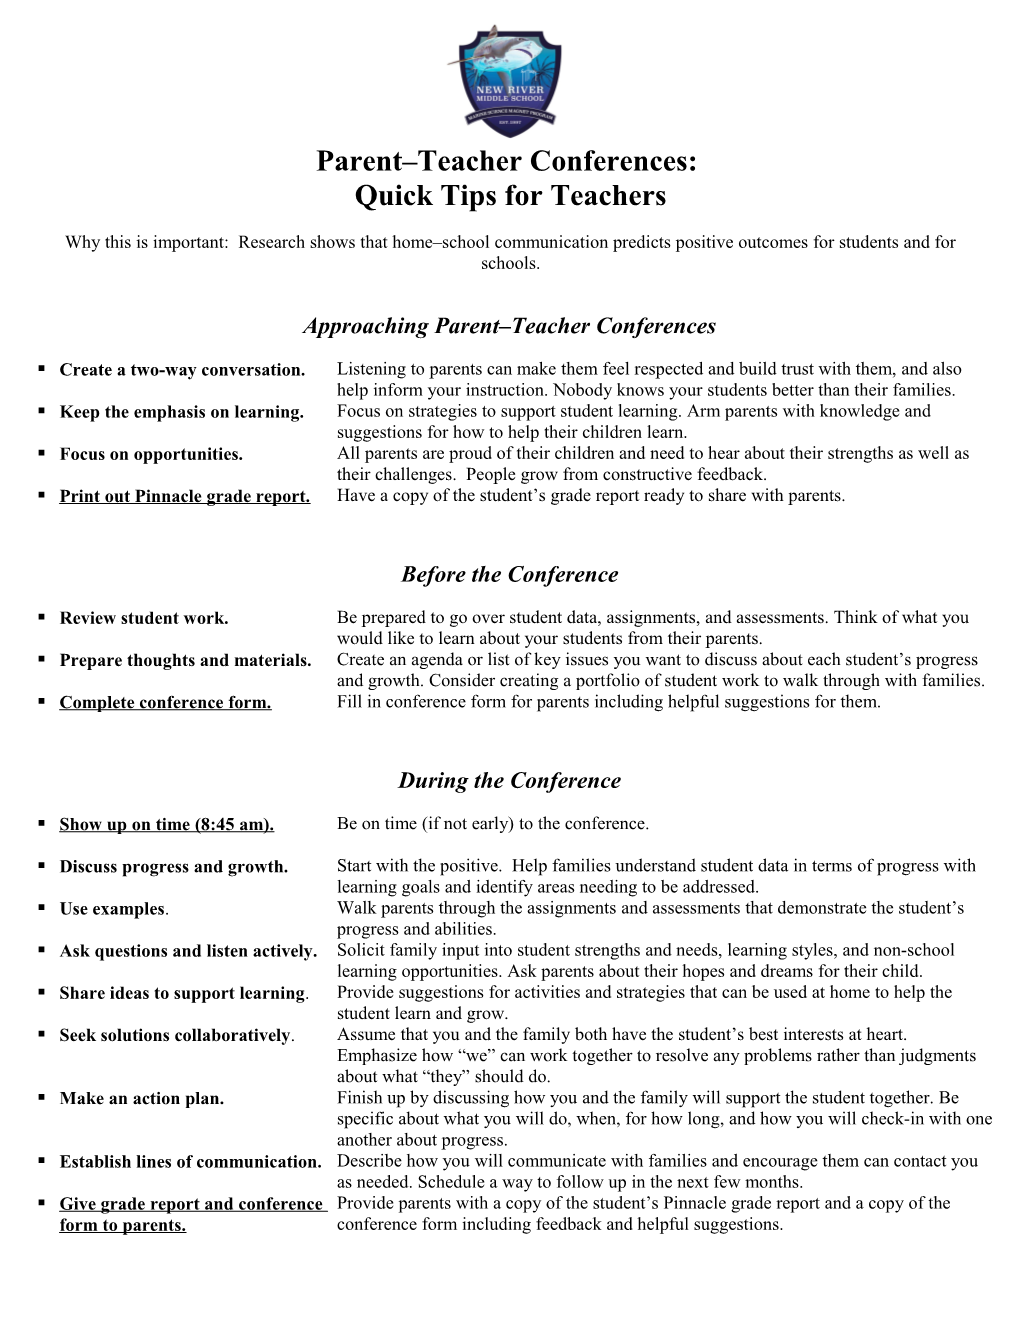 Quick Tips for Teachers